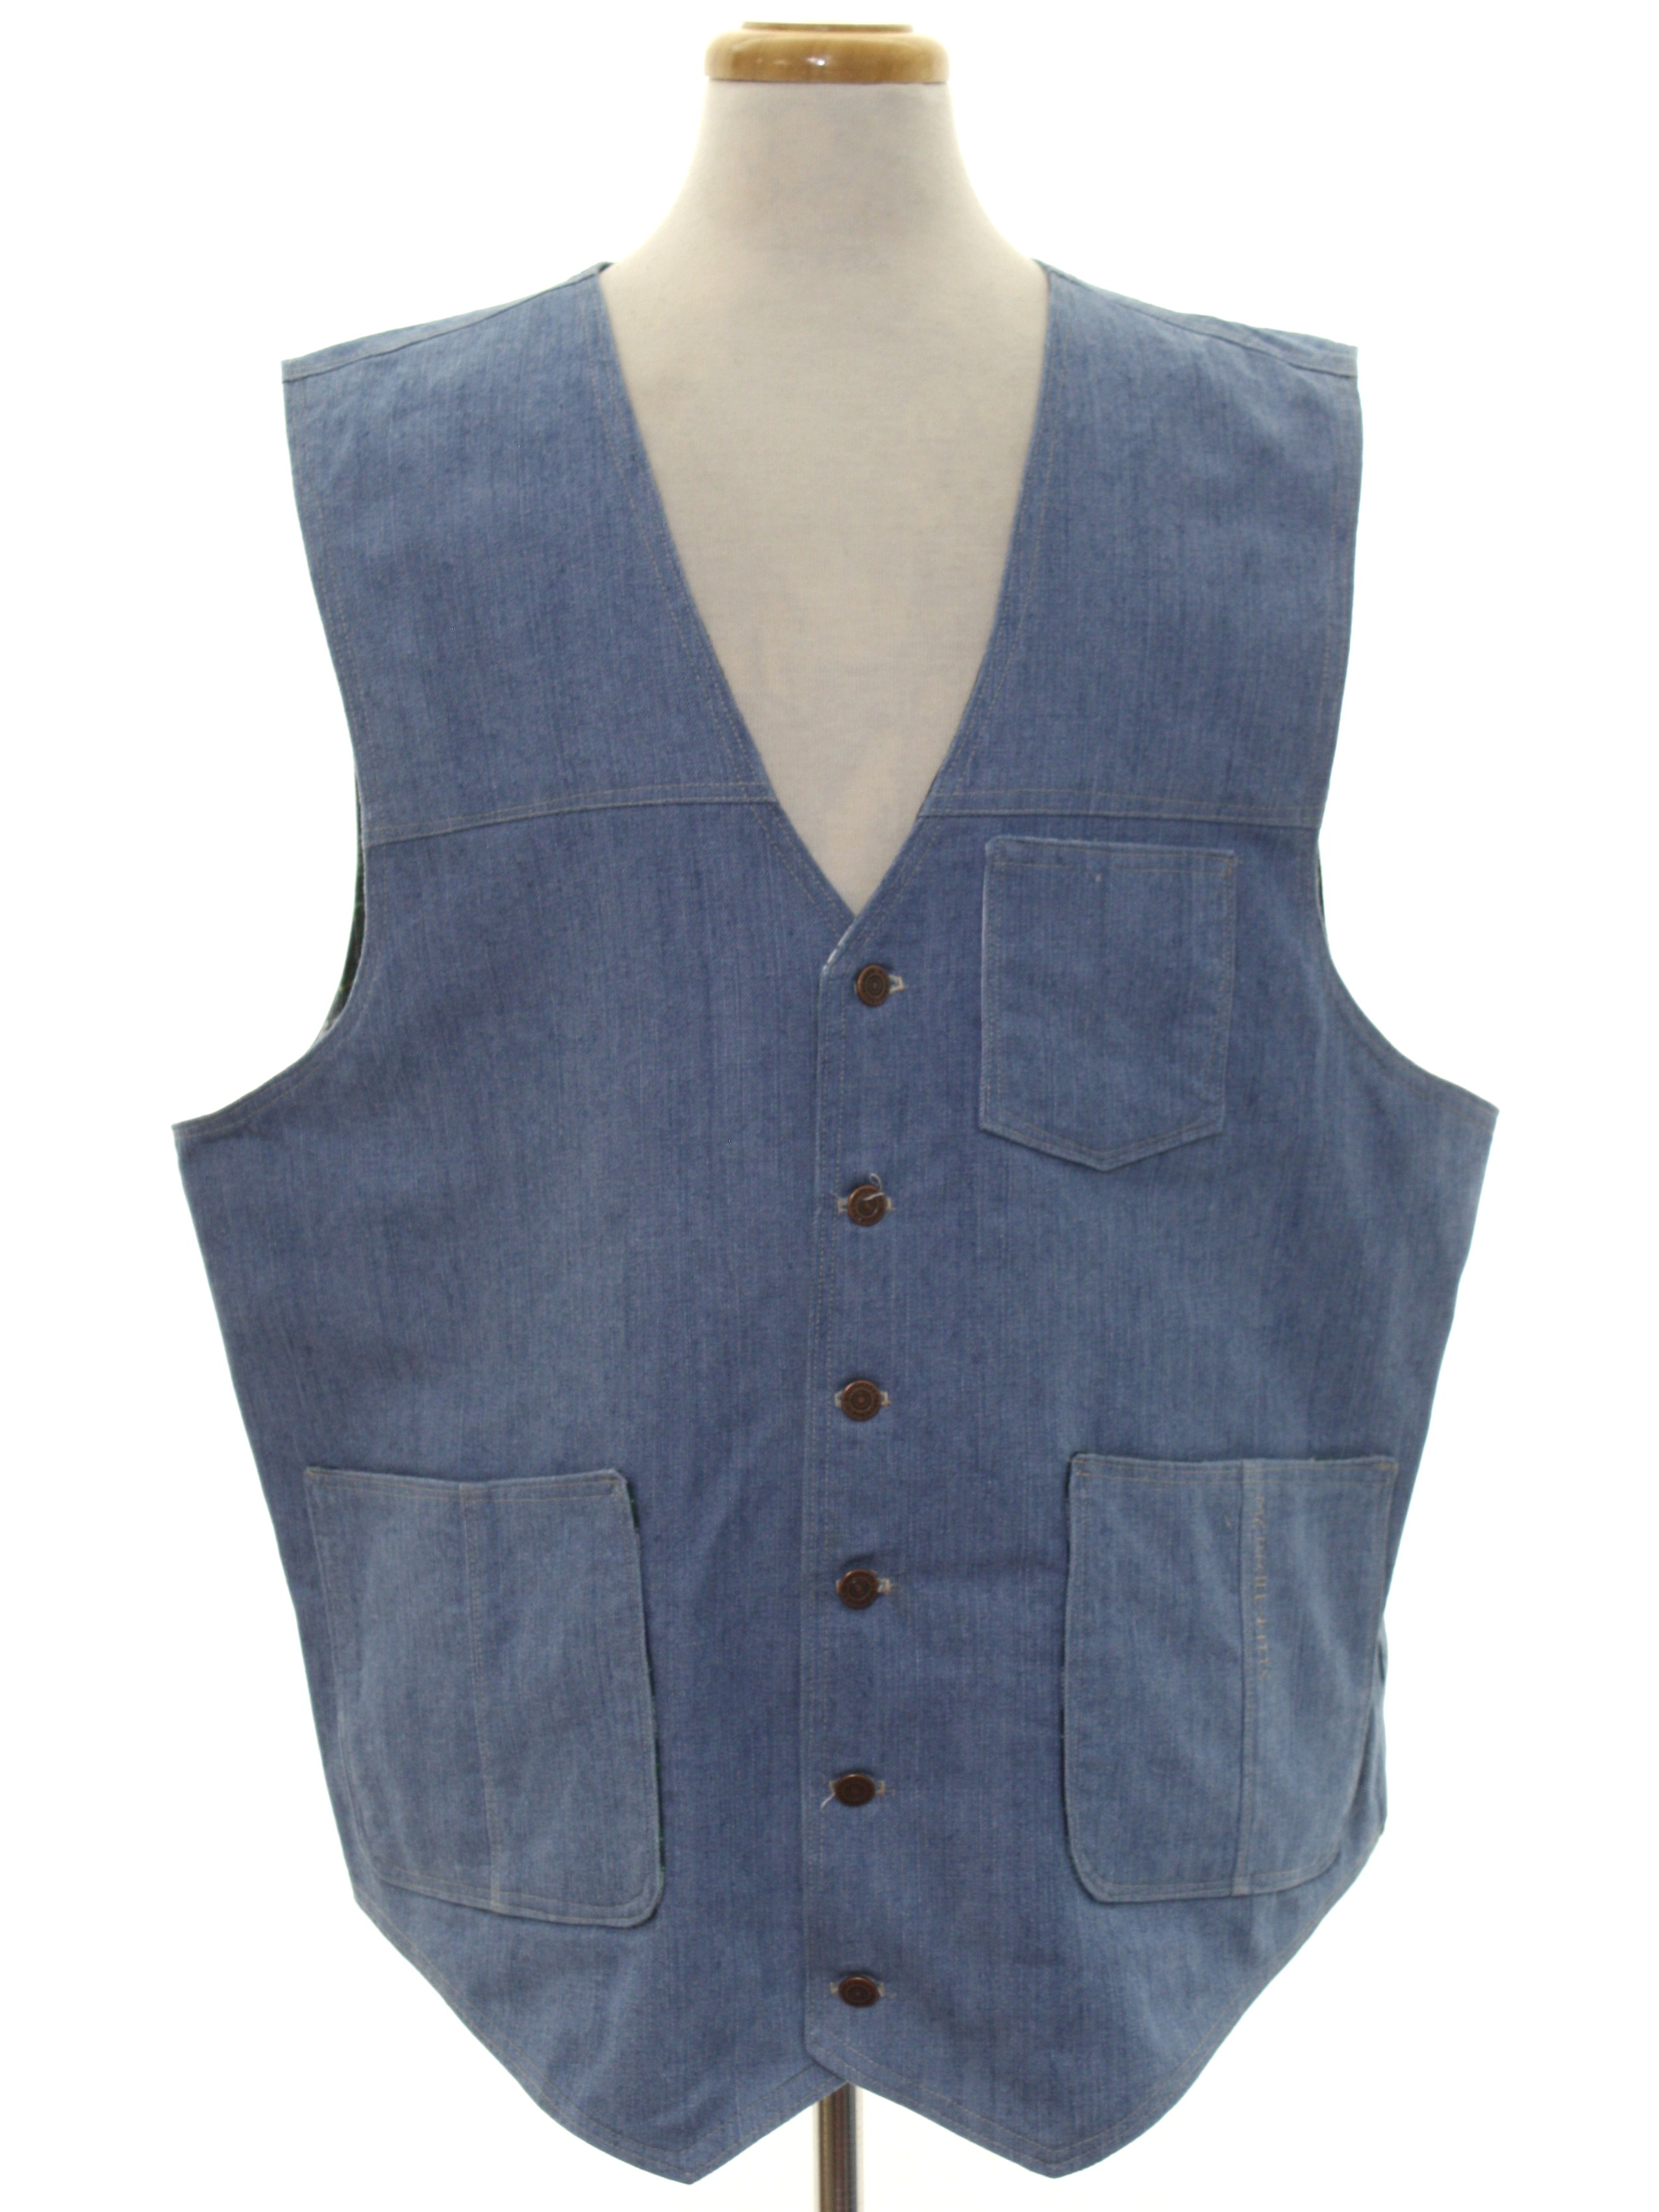 Retro Eighties Vest: 80s -(Home Sewn)- Mens pale blue cotton denim and ...